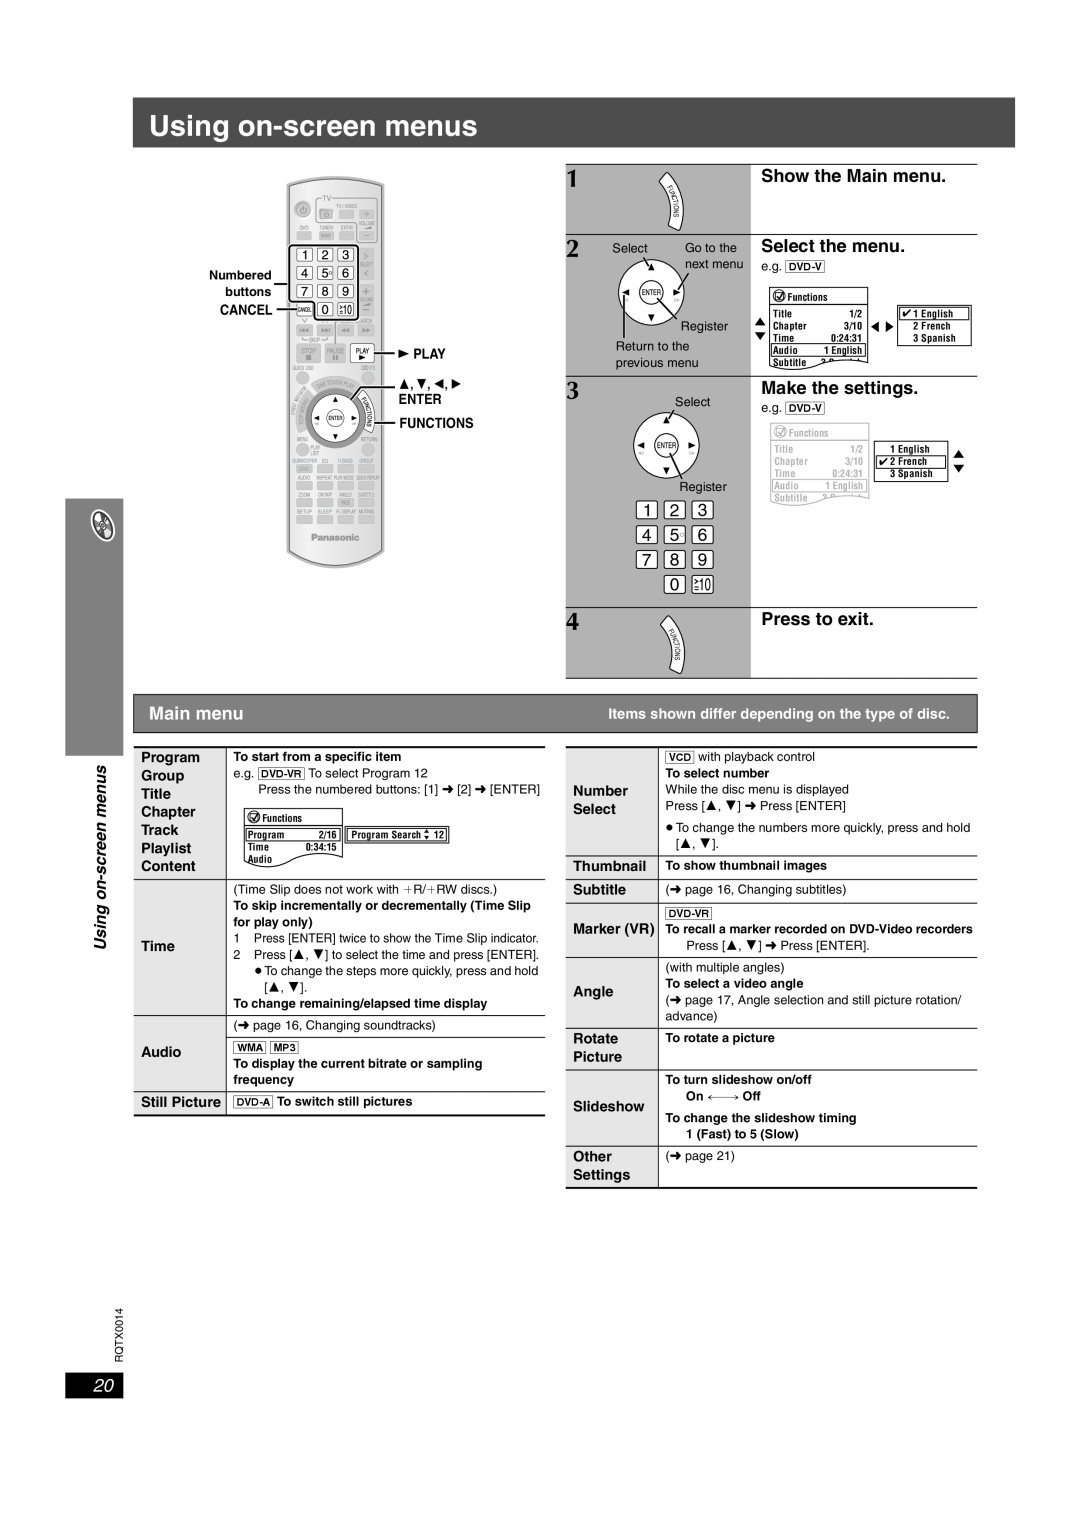 Panasonic SC-PTX5 manual Using on-screenmenus, Show the Main menu, Select the menu, Make the settings, Press to exit 